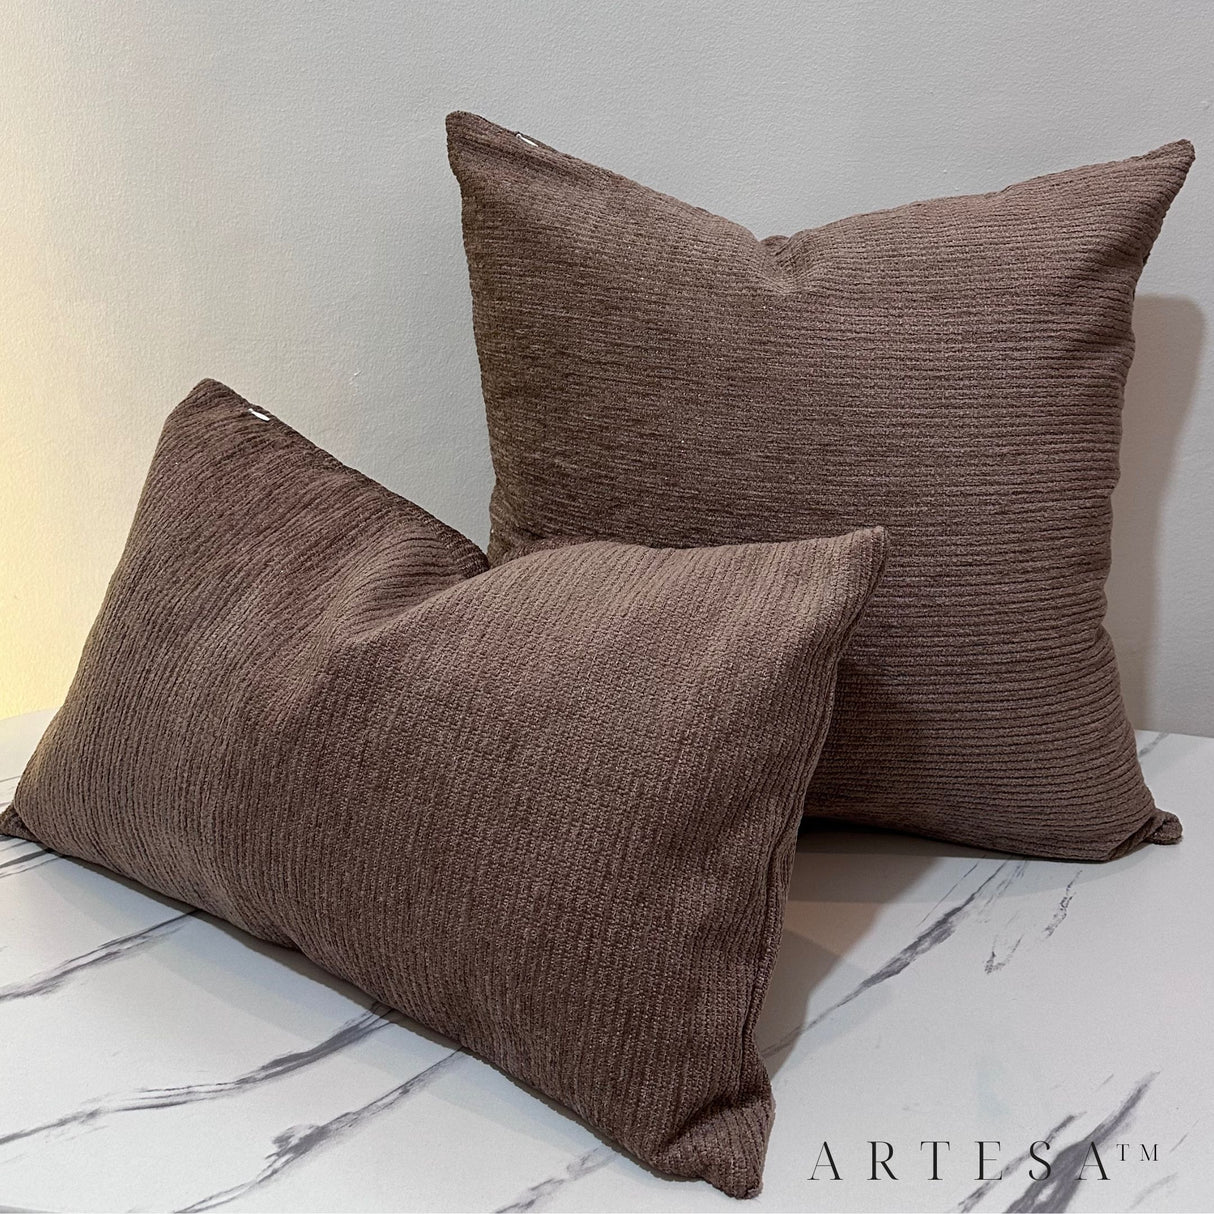 Artesa Nora Premium Cotton Chanel Throw Pillow Cover with hidden zipper closure - Elegant Home Decor Accent